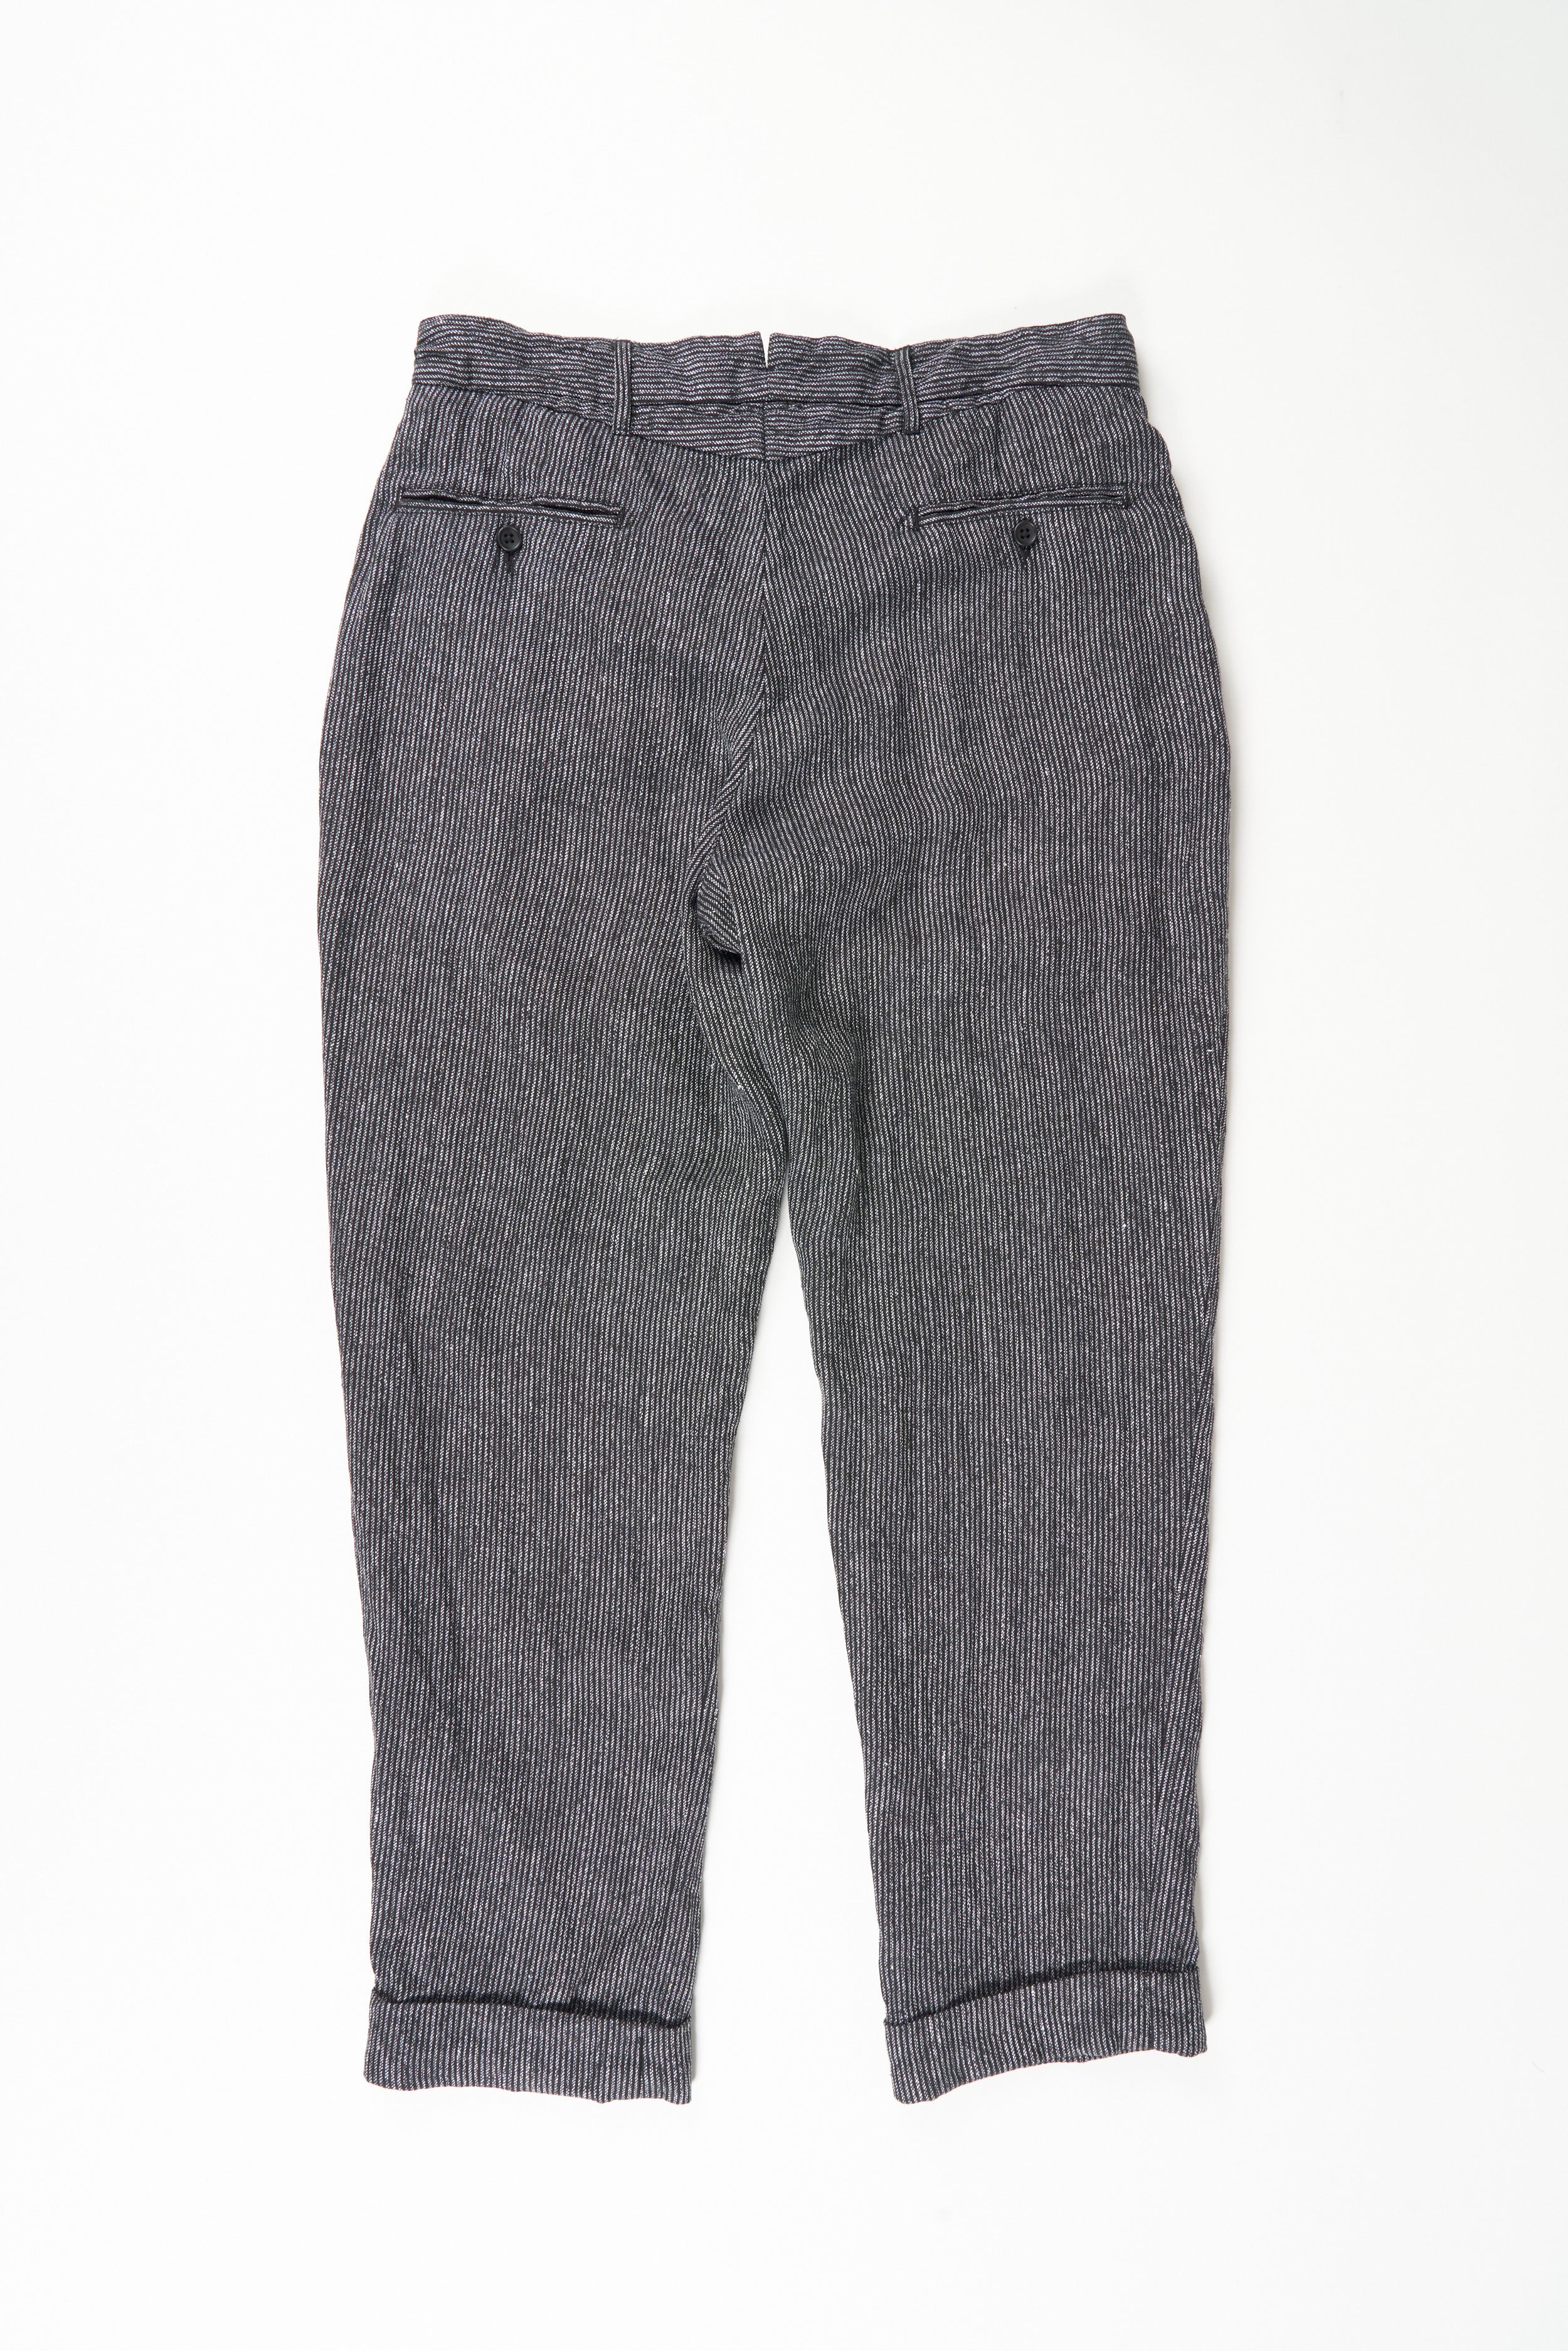 Engineered Garments Andover Pant - Black/Grey Linen Stripe